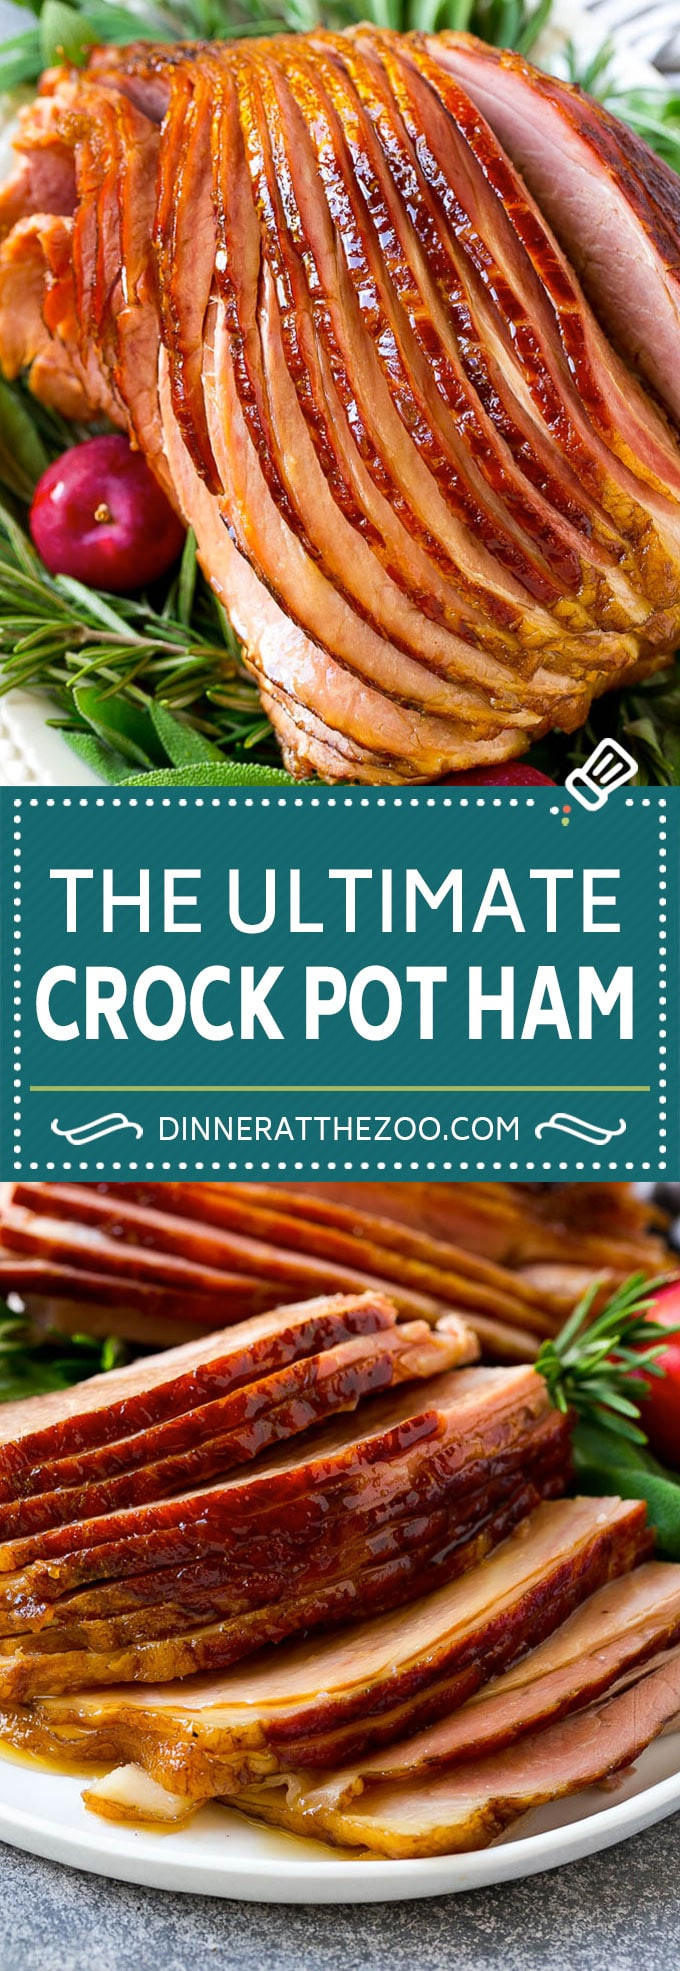 Easter Ham Crock Pot Recipes
 Crock Pot Ham with Brown Sugar Glaze Dinner at the Zoo